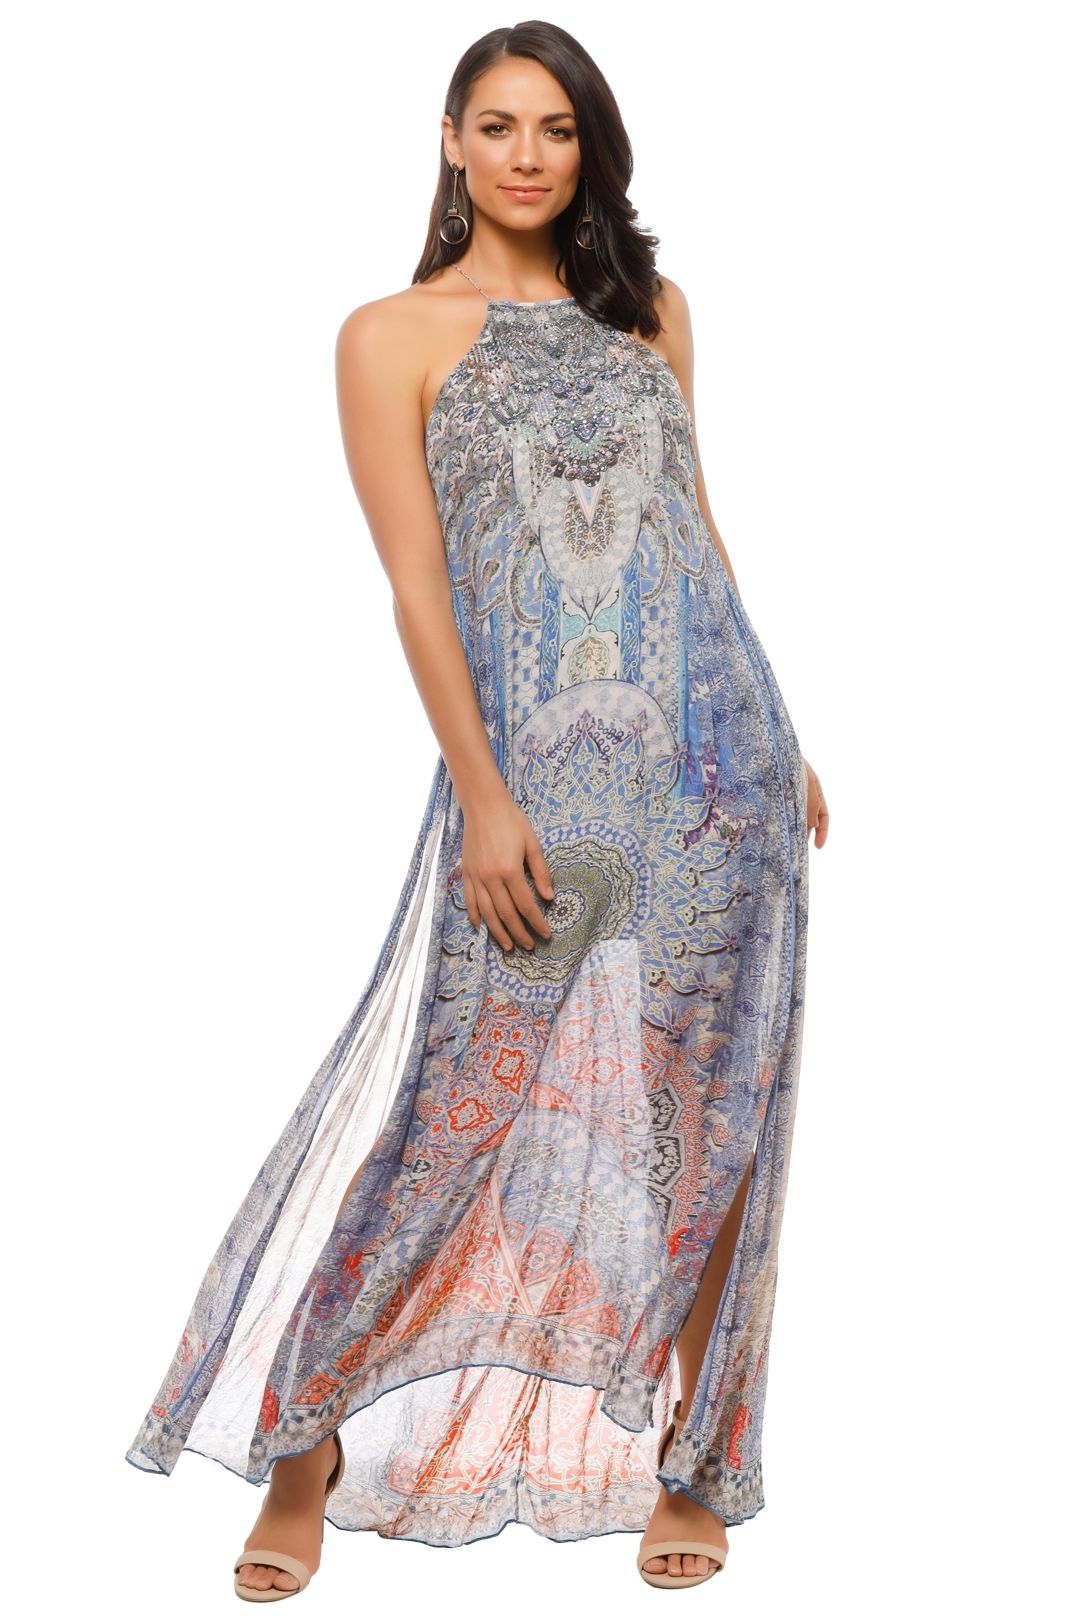 Camilla - Concubine Realm Sheer Overlay Dress - Blue Prints - Side